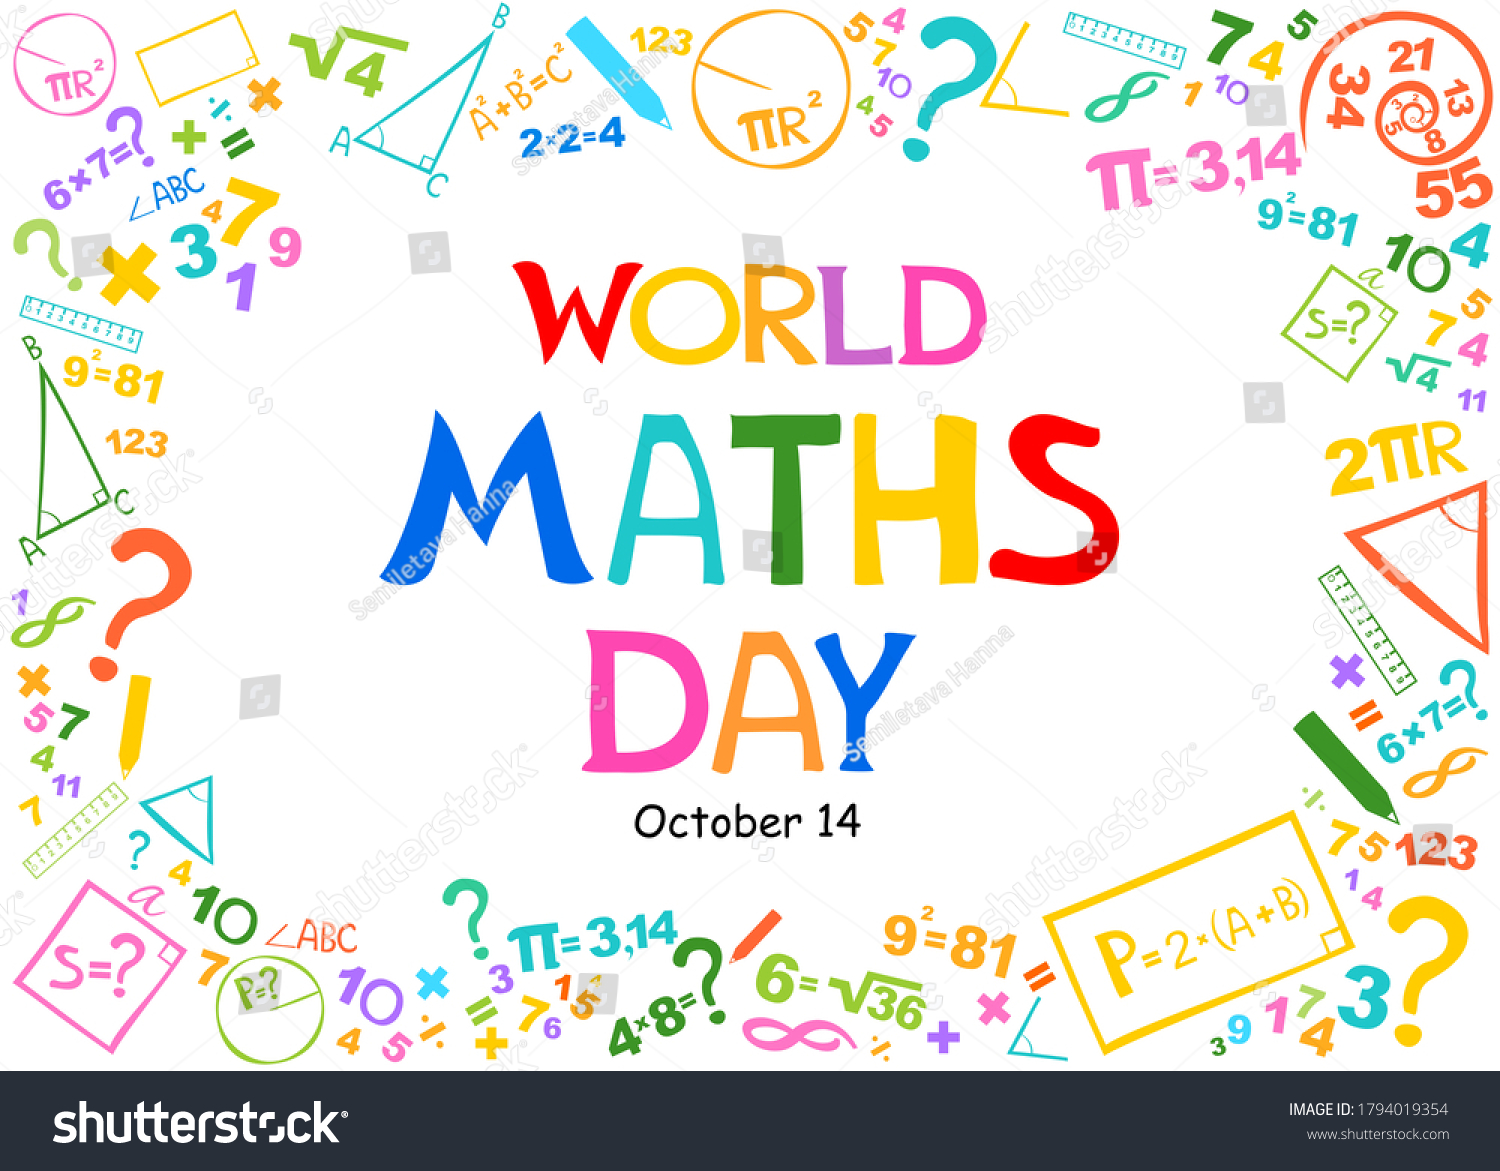 1,036 World Maths Day Images, Stock Photos & Vectors Shutterstock